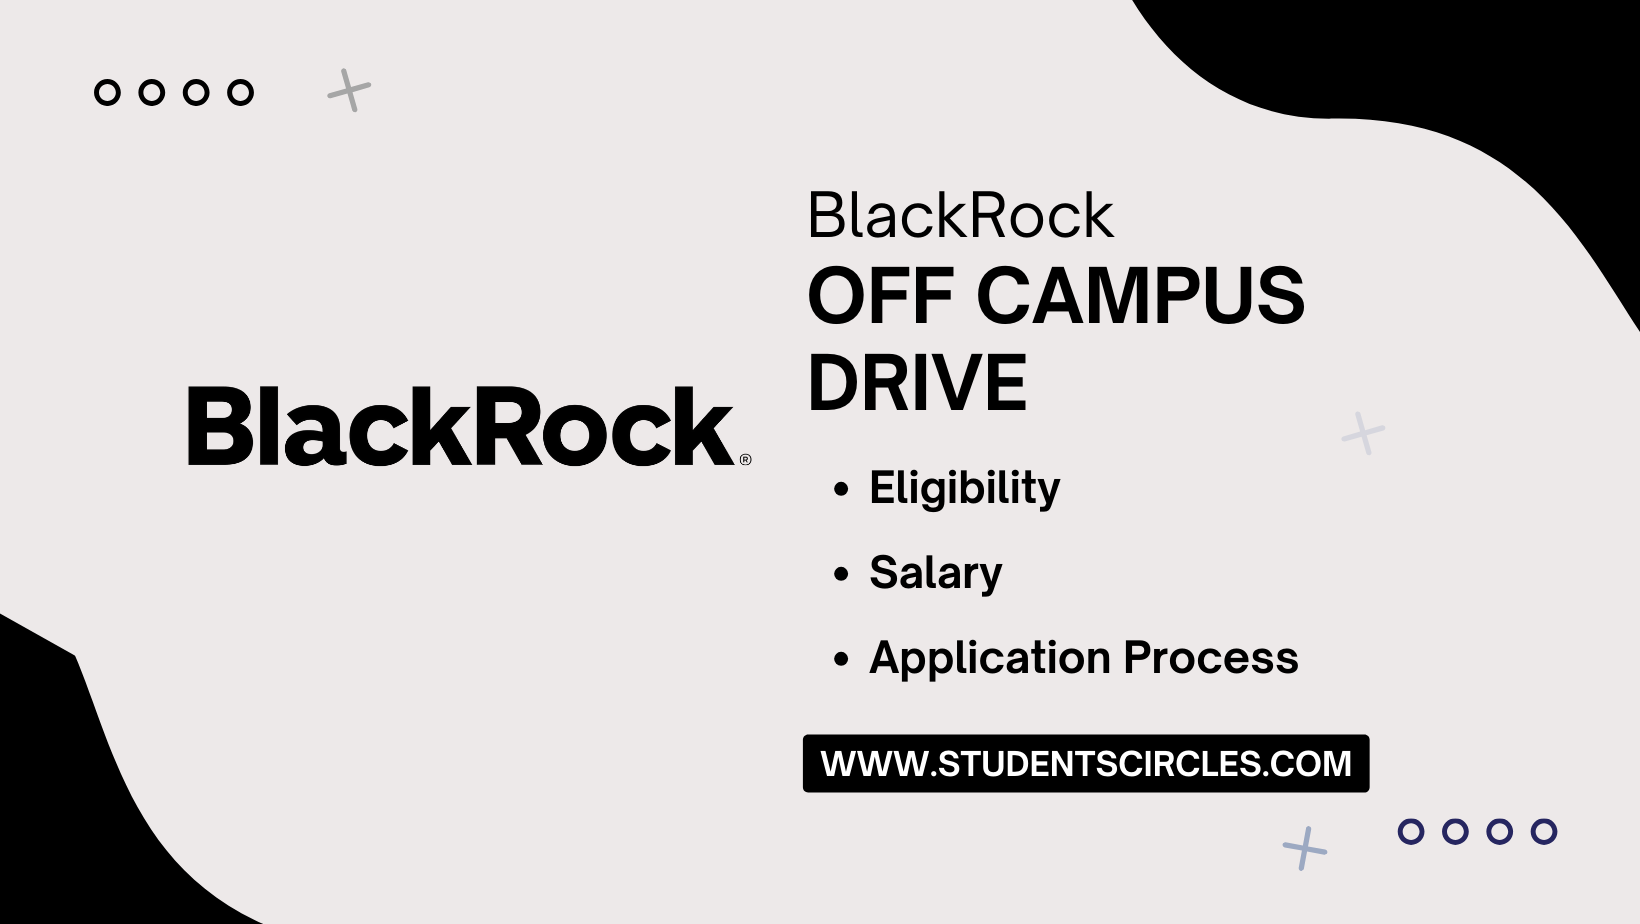 BlackRock Off Campus Drive